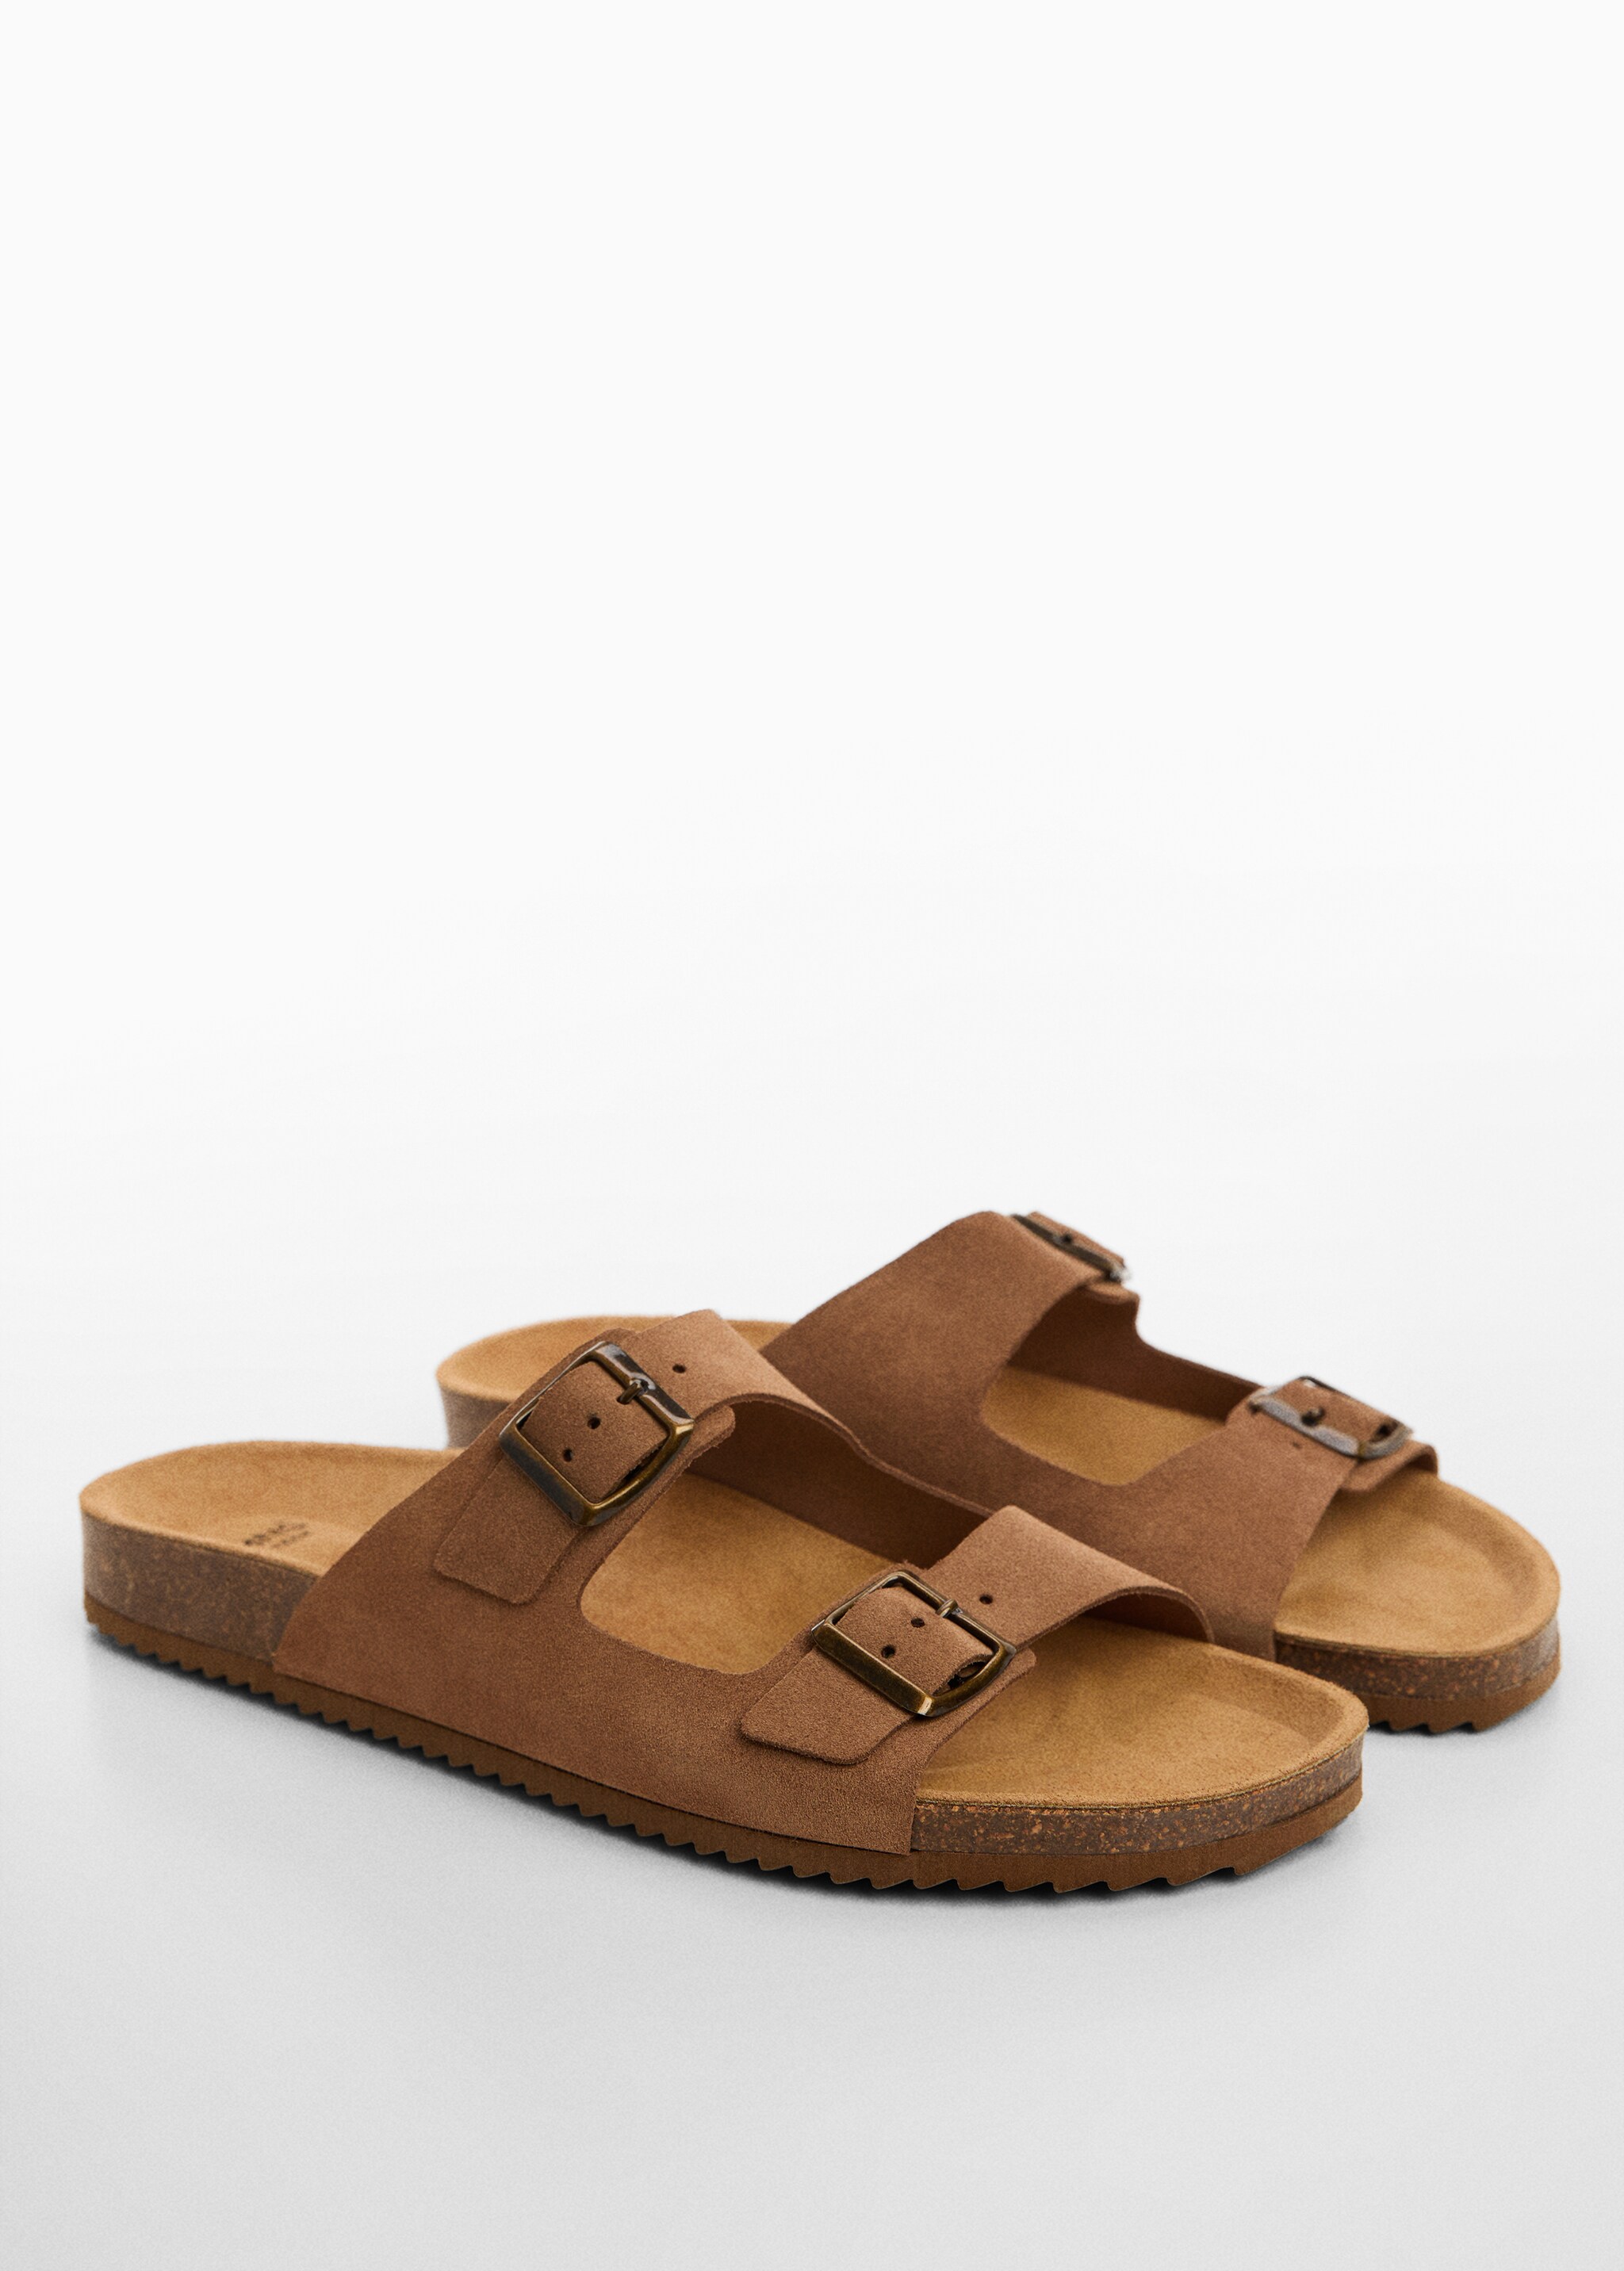 Buckle leather sandals - Medium plane